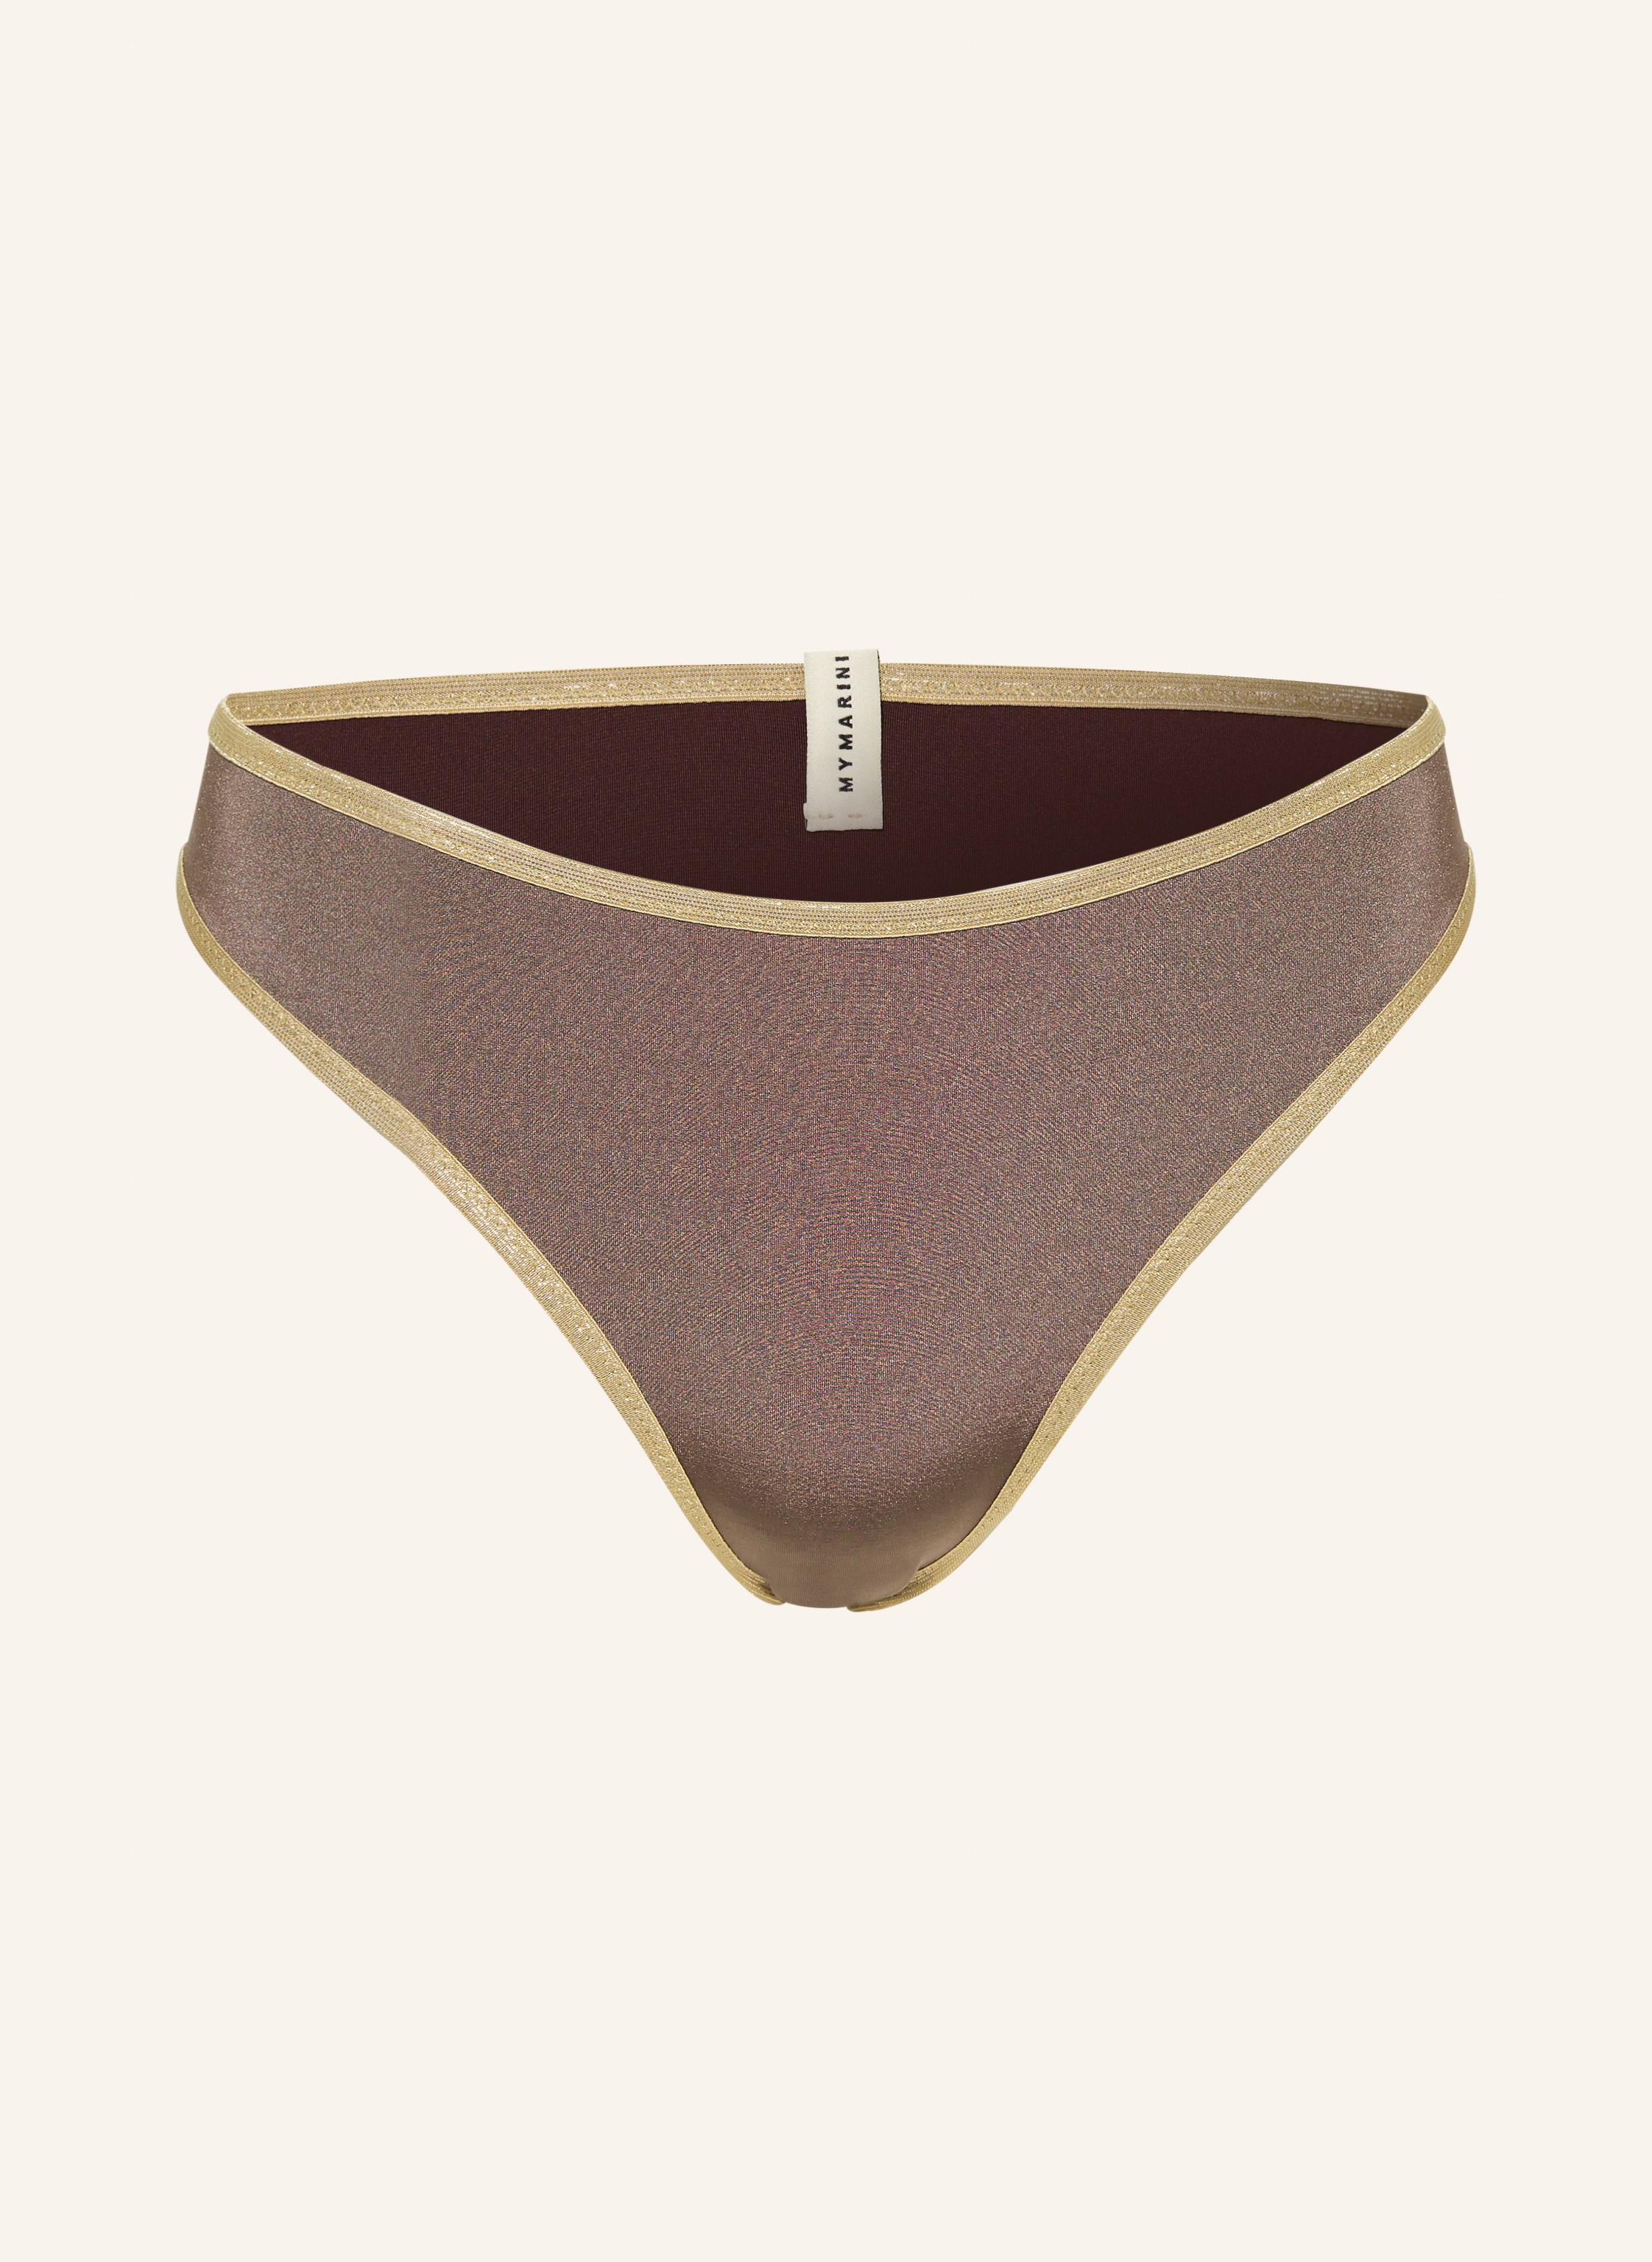 MYMARINI Reversible bralette bikini top SHINE with glitter thread in brown